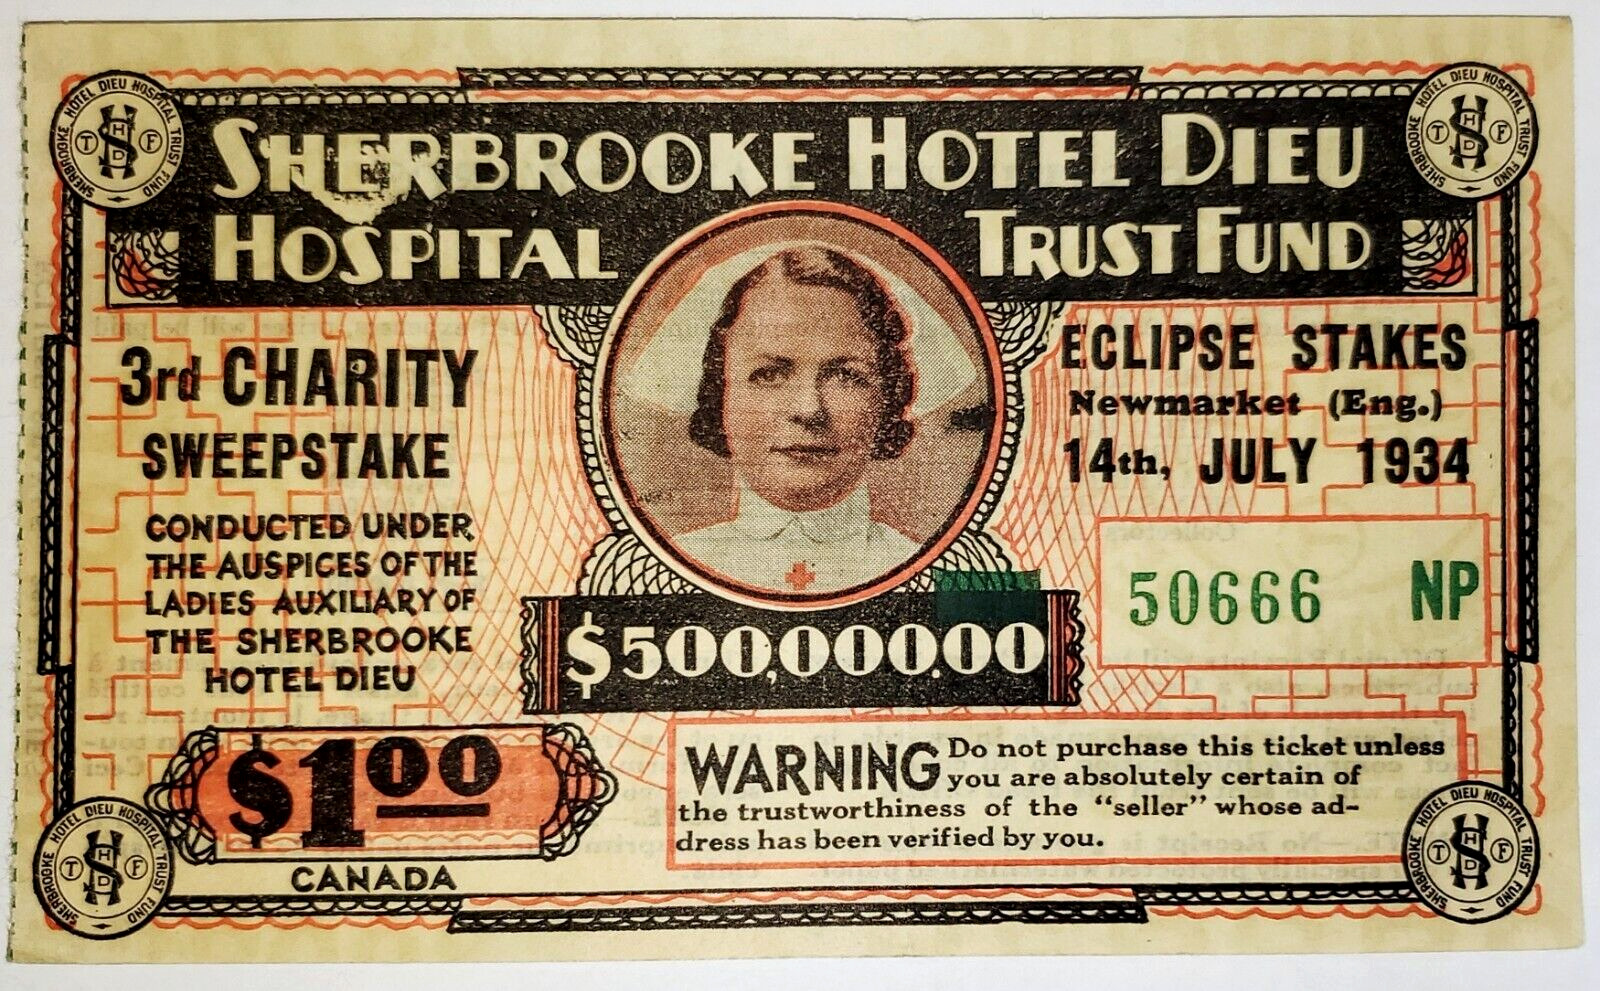 VTG 1934 Sherbrooke Hotel Dieu Hospital Trust Fund Sweepstake Ticket